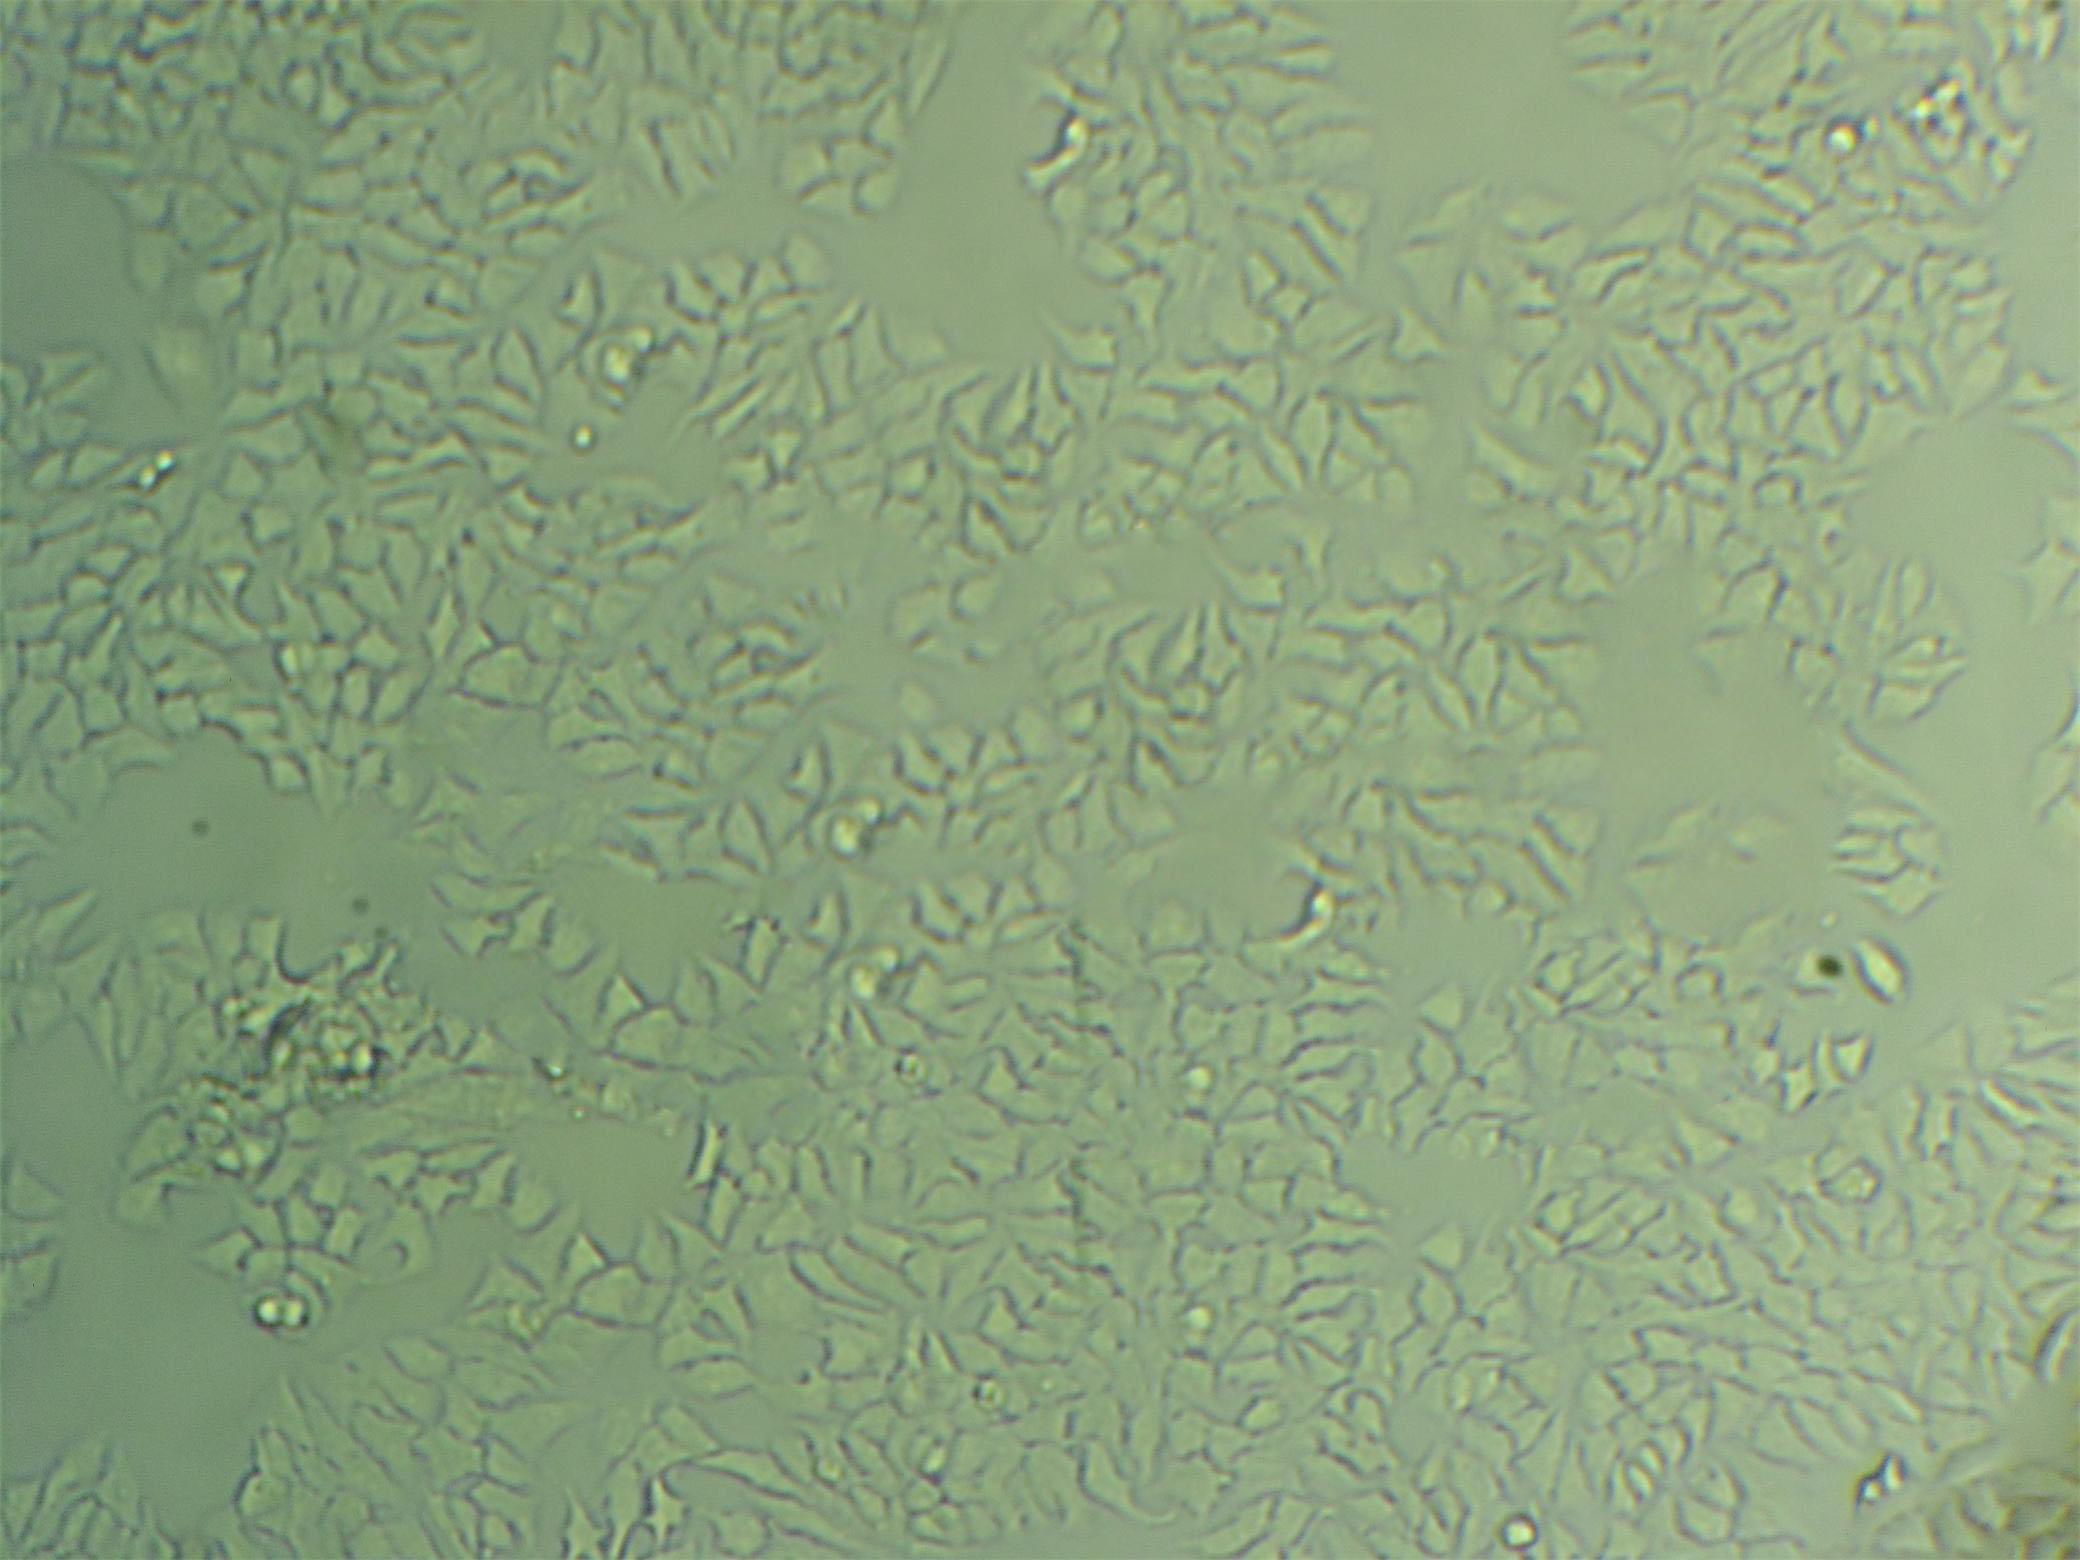 6-10B cell line人鼻咽癌细胞系,6-10B cell line